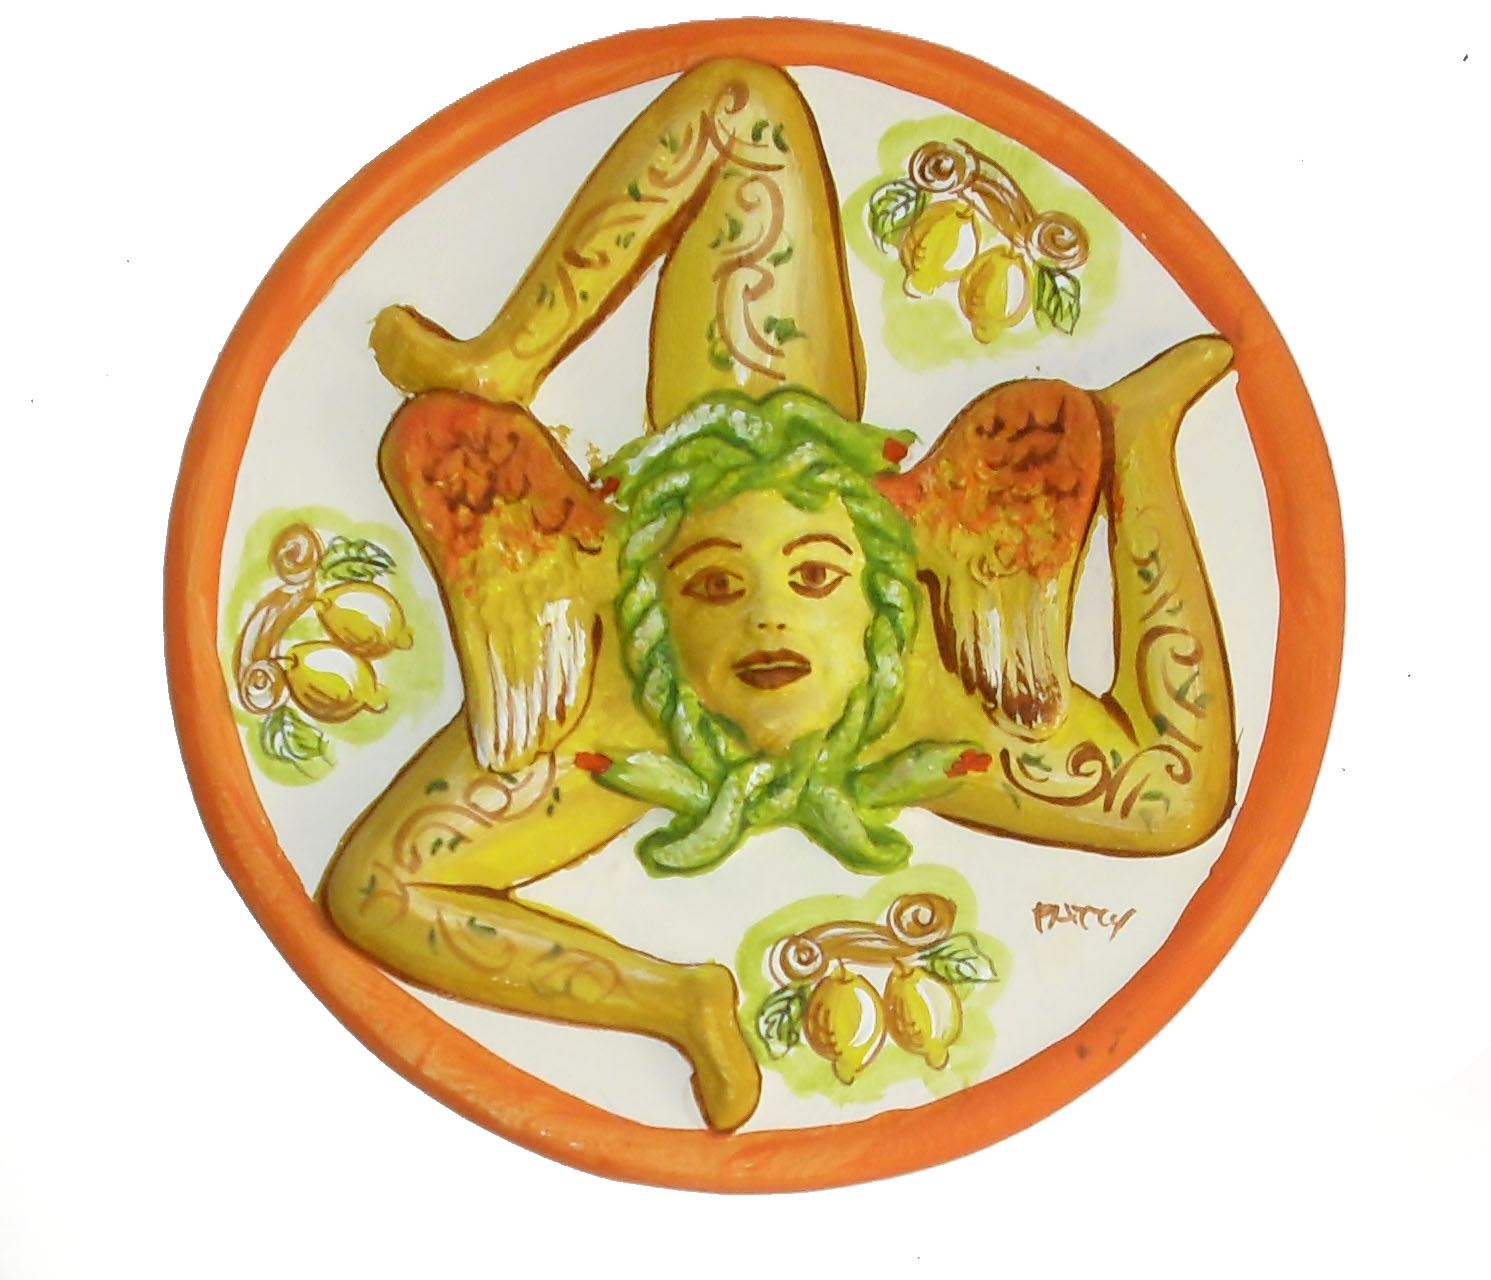 Triscele e Medaglioni in ceramica artistica siciliana